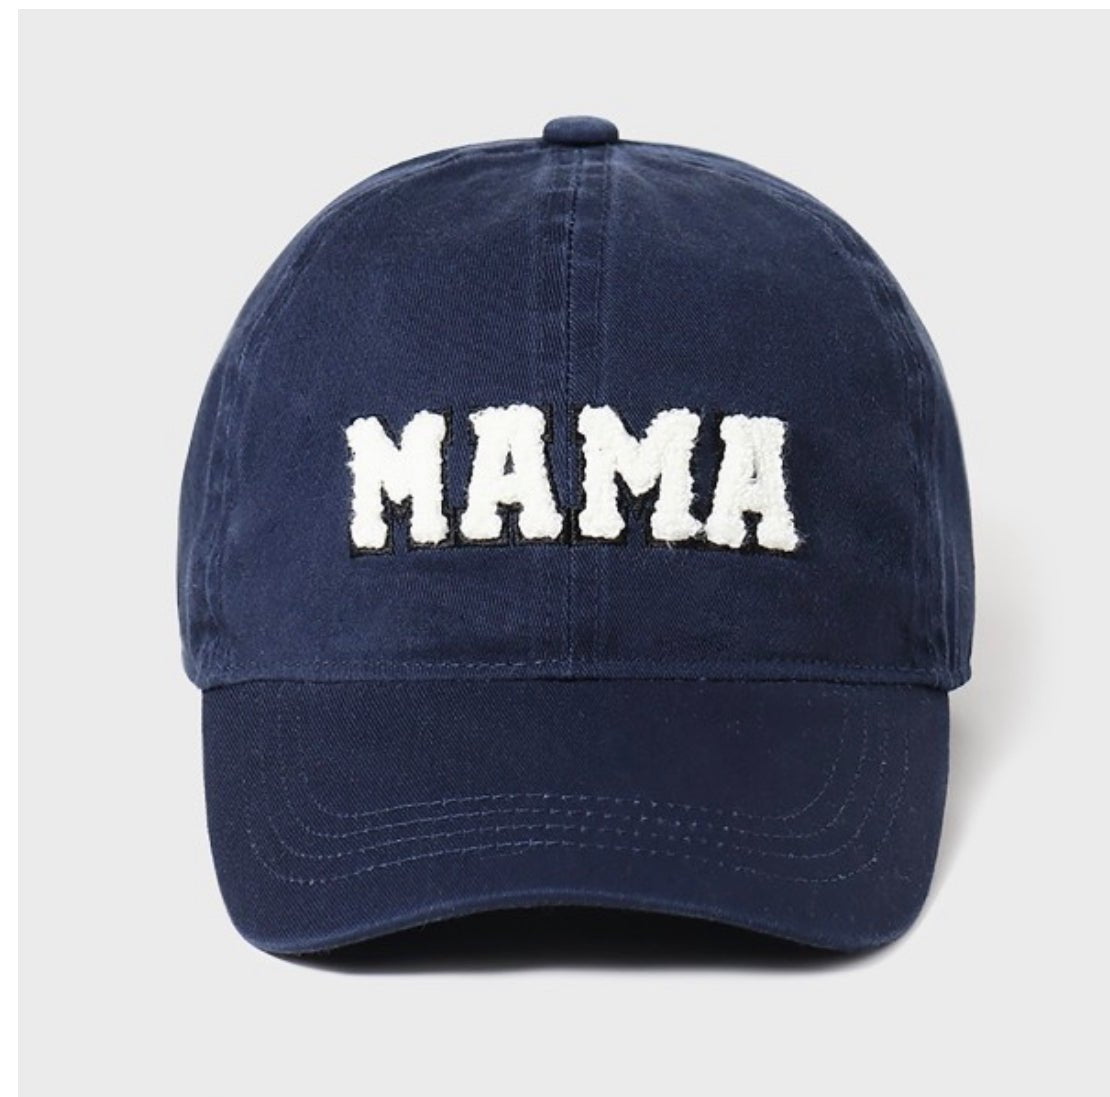 "Mama" Sherpa Lettered Vintage Baseball Cap